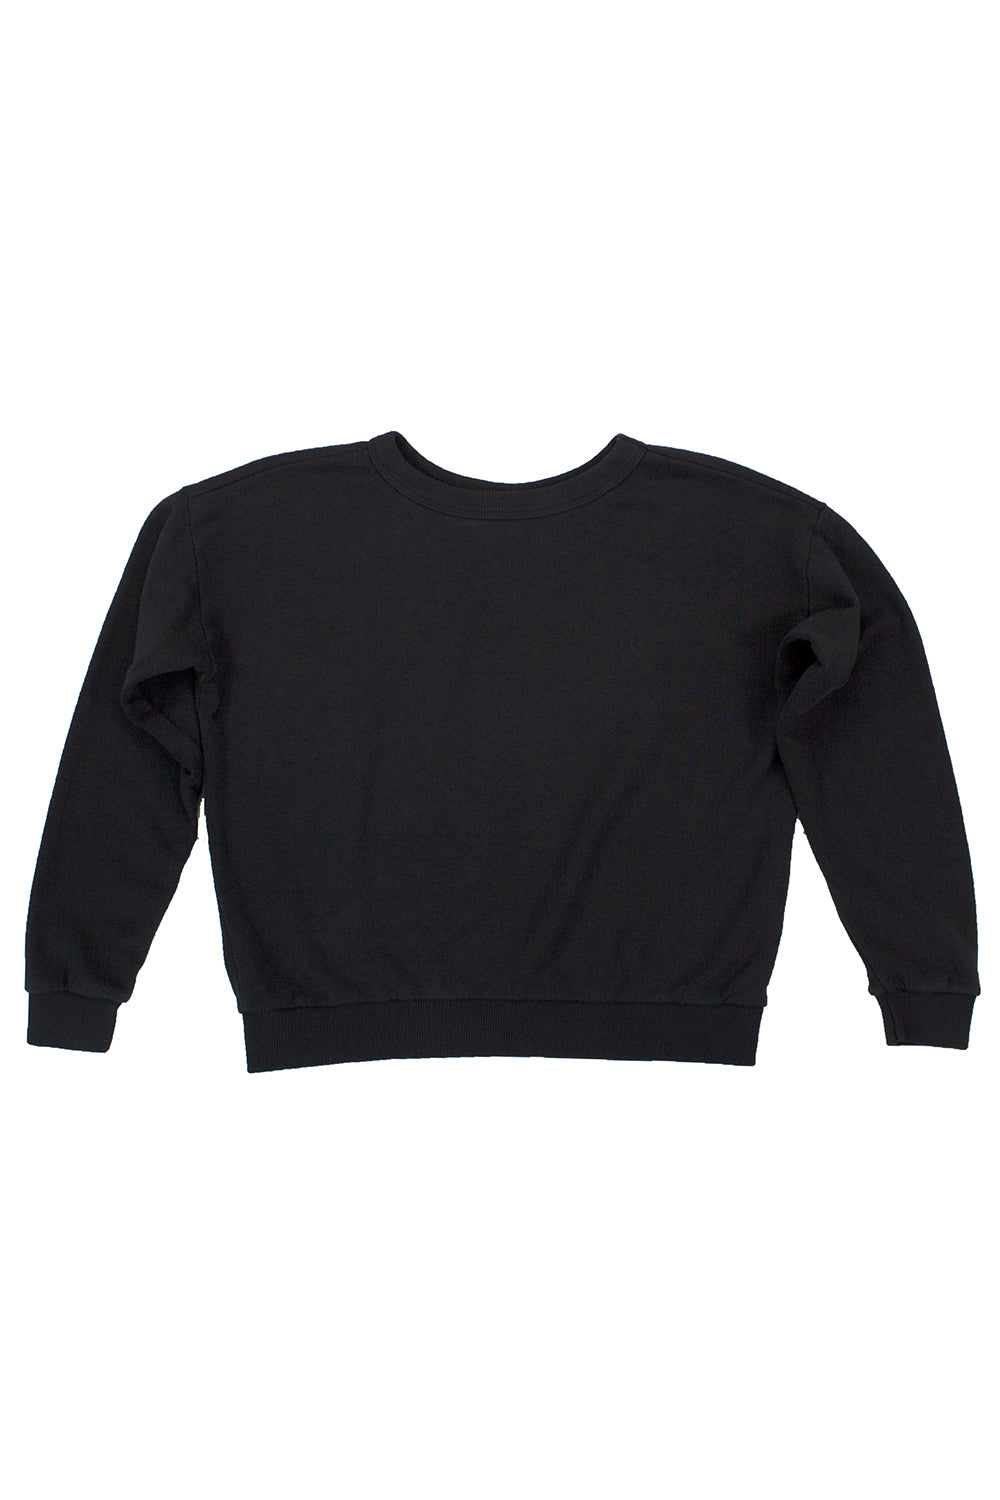 Crux Cropped Sweatshirt | Jungmaven Hemp Clothing & Accessories / Color: Black